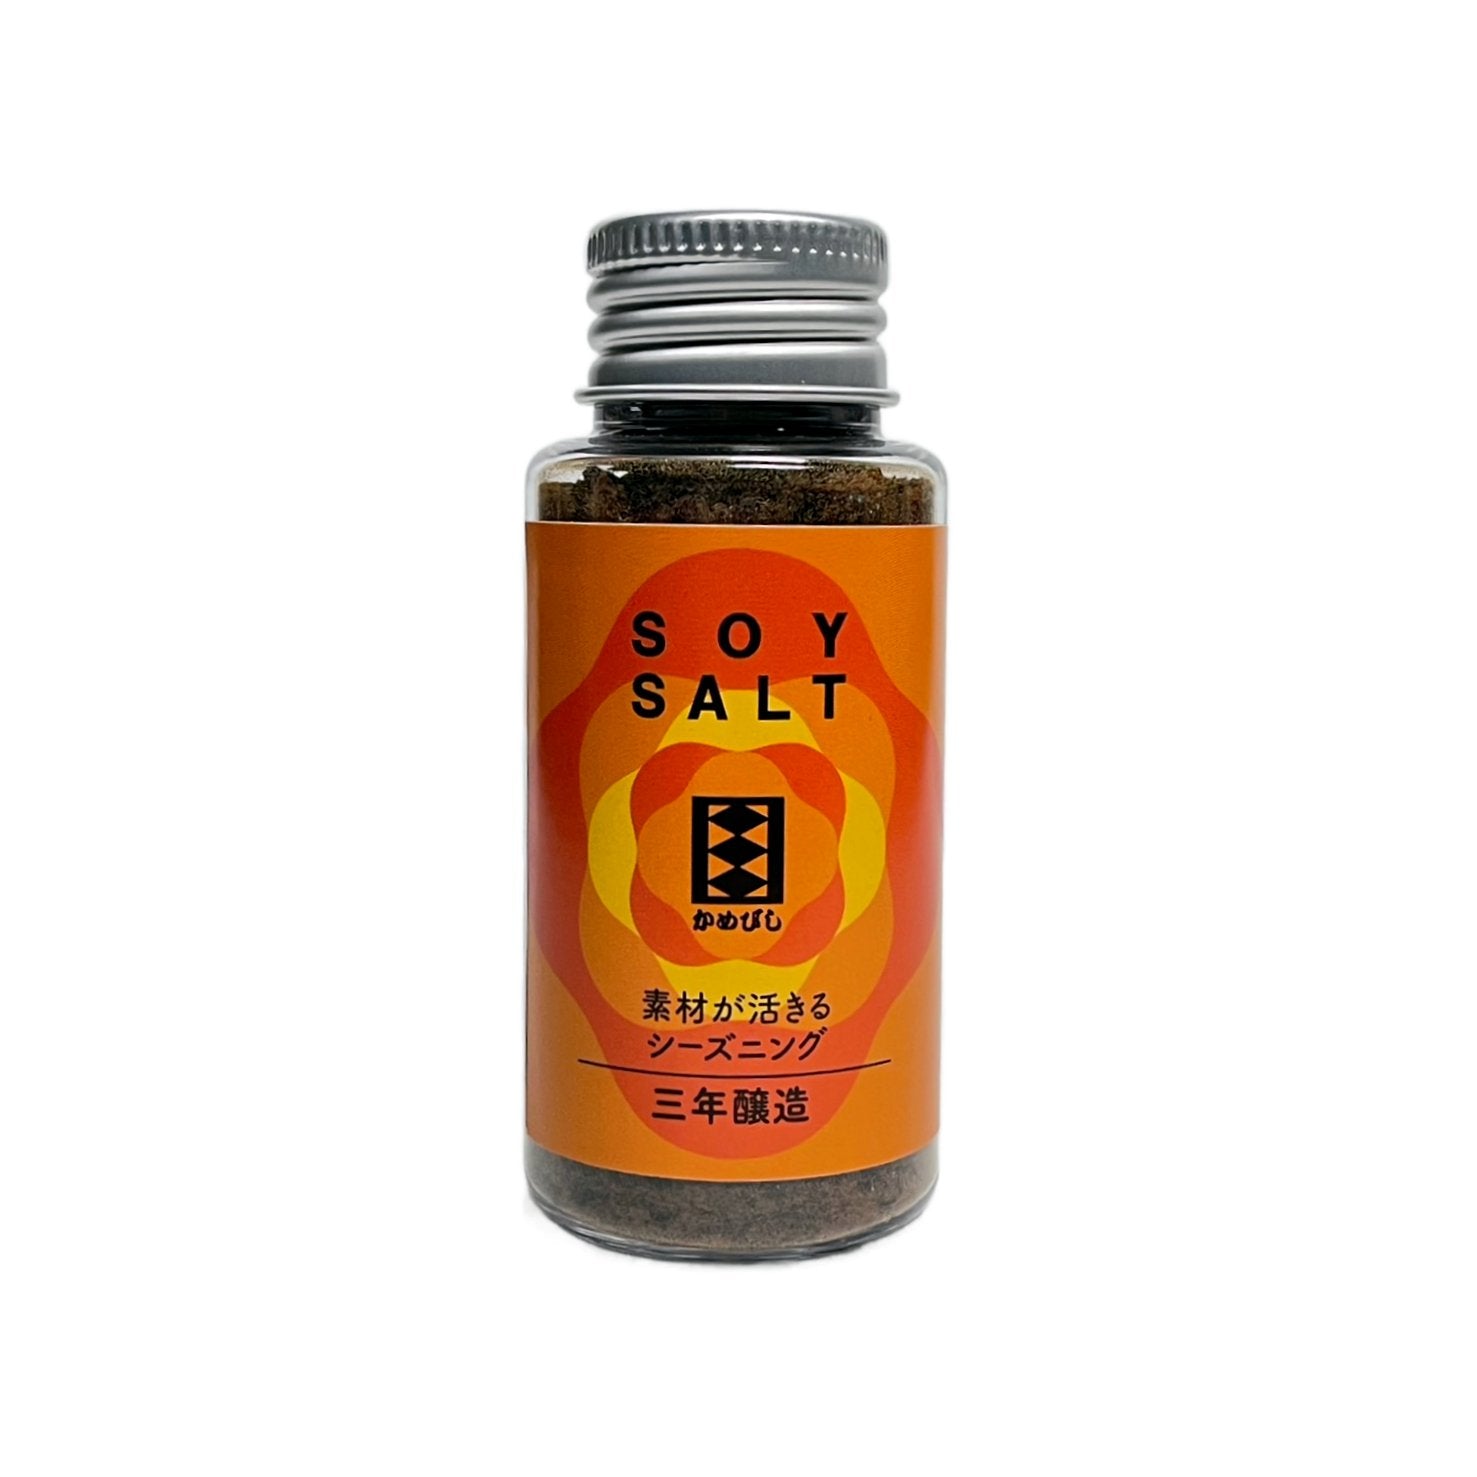 Kamebishi Soy Sauce Salt 3-Years Aged Natural Condiment 25g